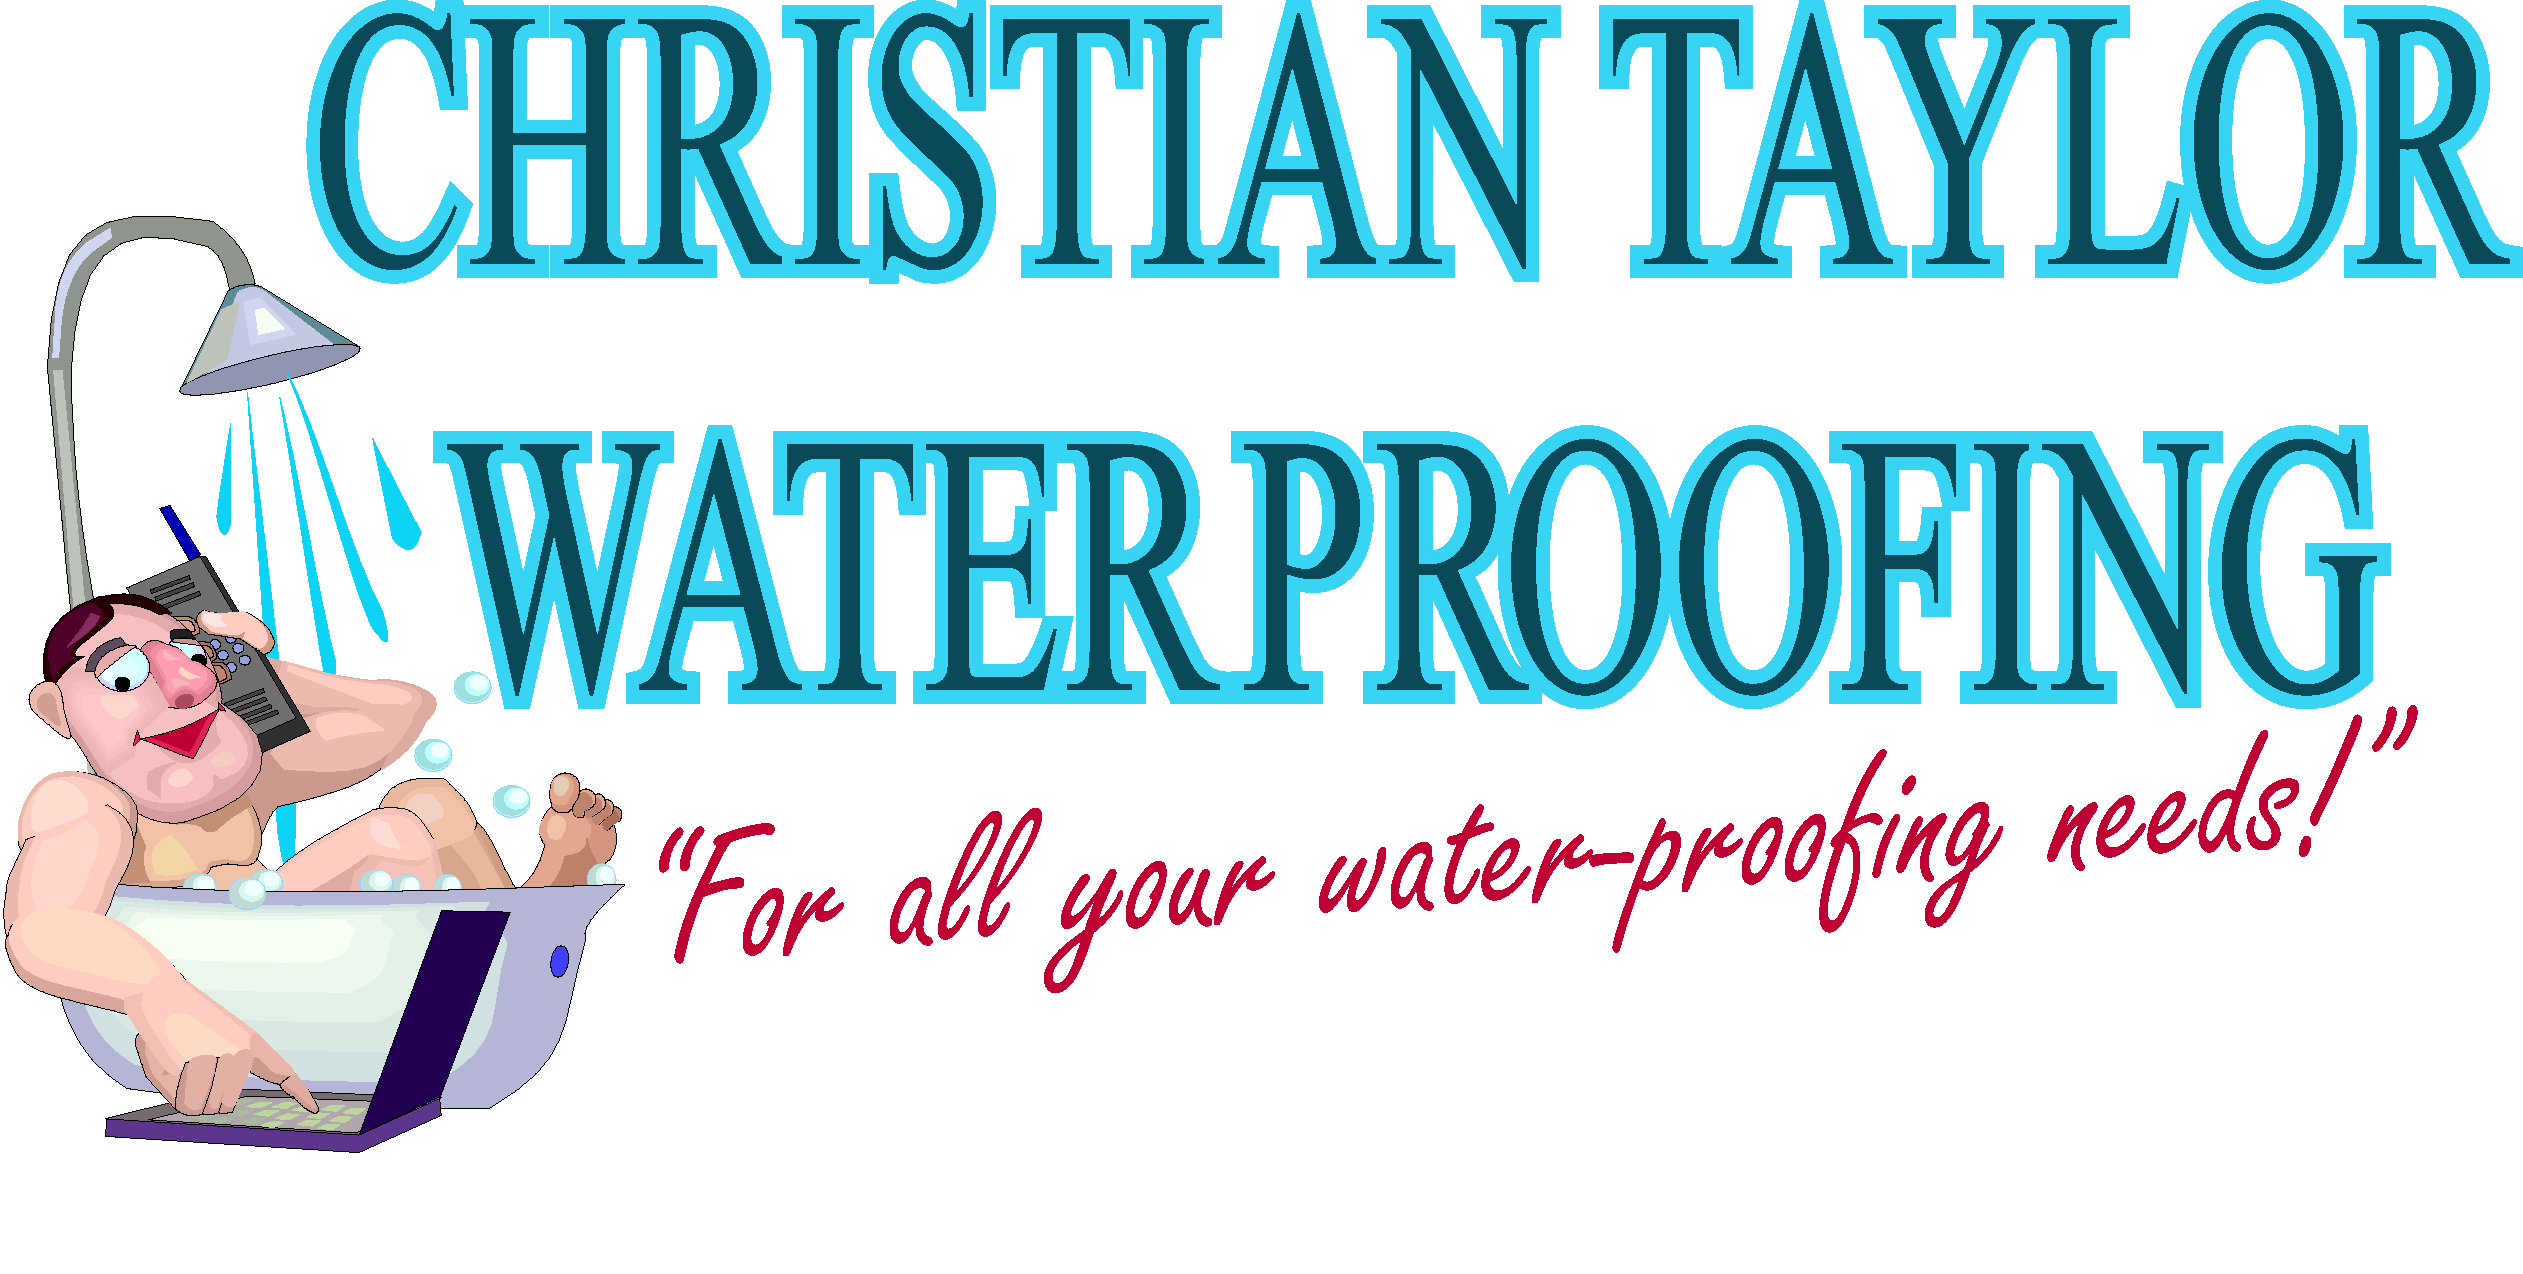 Christian Taylor Waterproofing logo